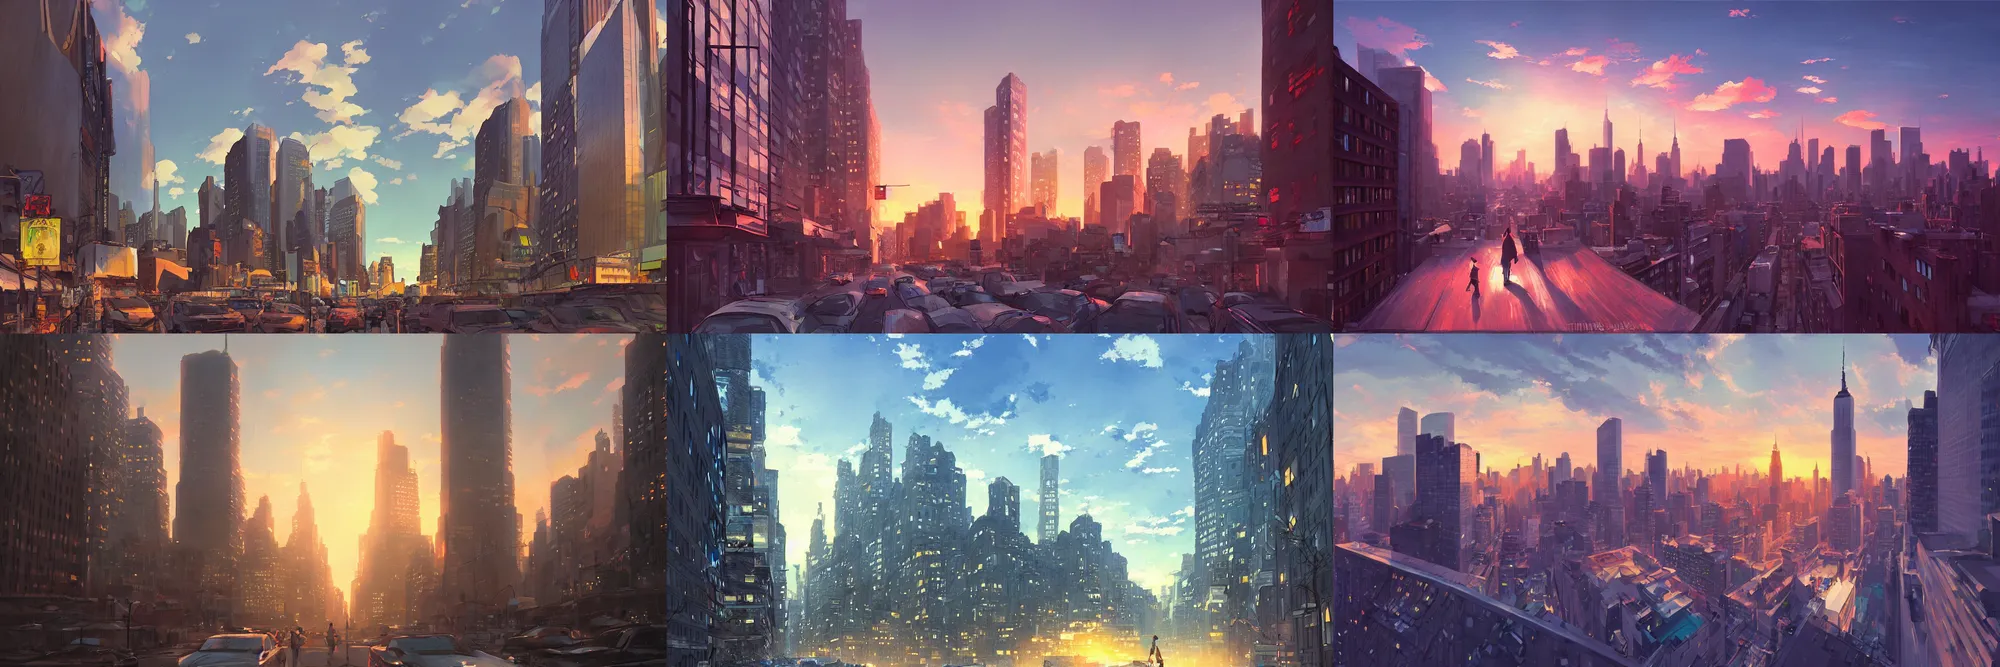 Prompt: fantasy new york city, lanscape, modern, sunset, dusk, perspective, street view, art by makoto shinkai